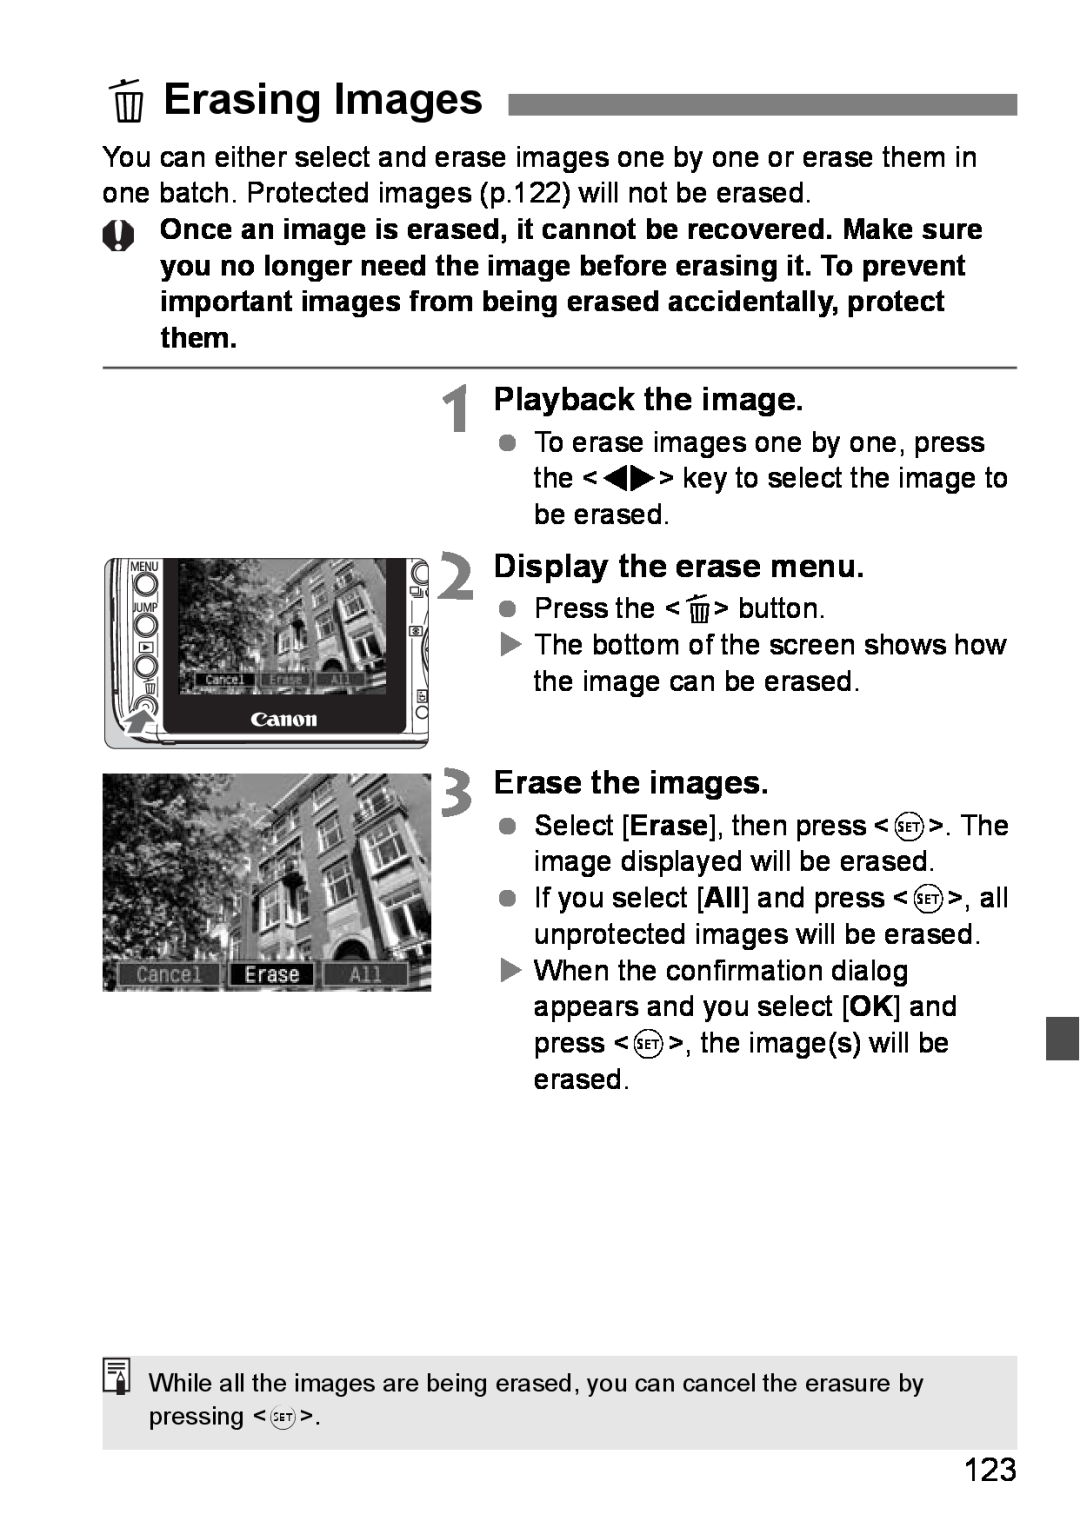 Canon EOS DIGITAL REBEL XTI LErasing Images, Playback the image, Display the erase menu, Erase the images 